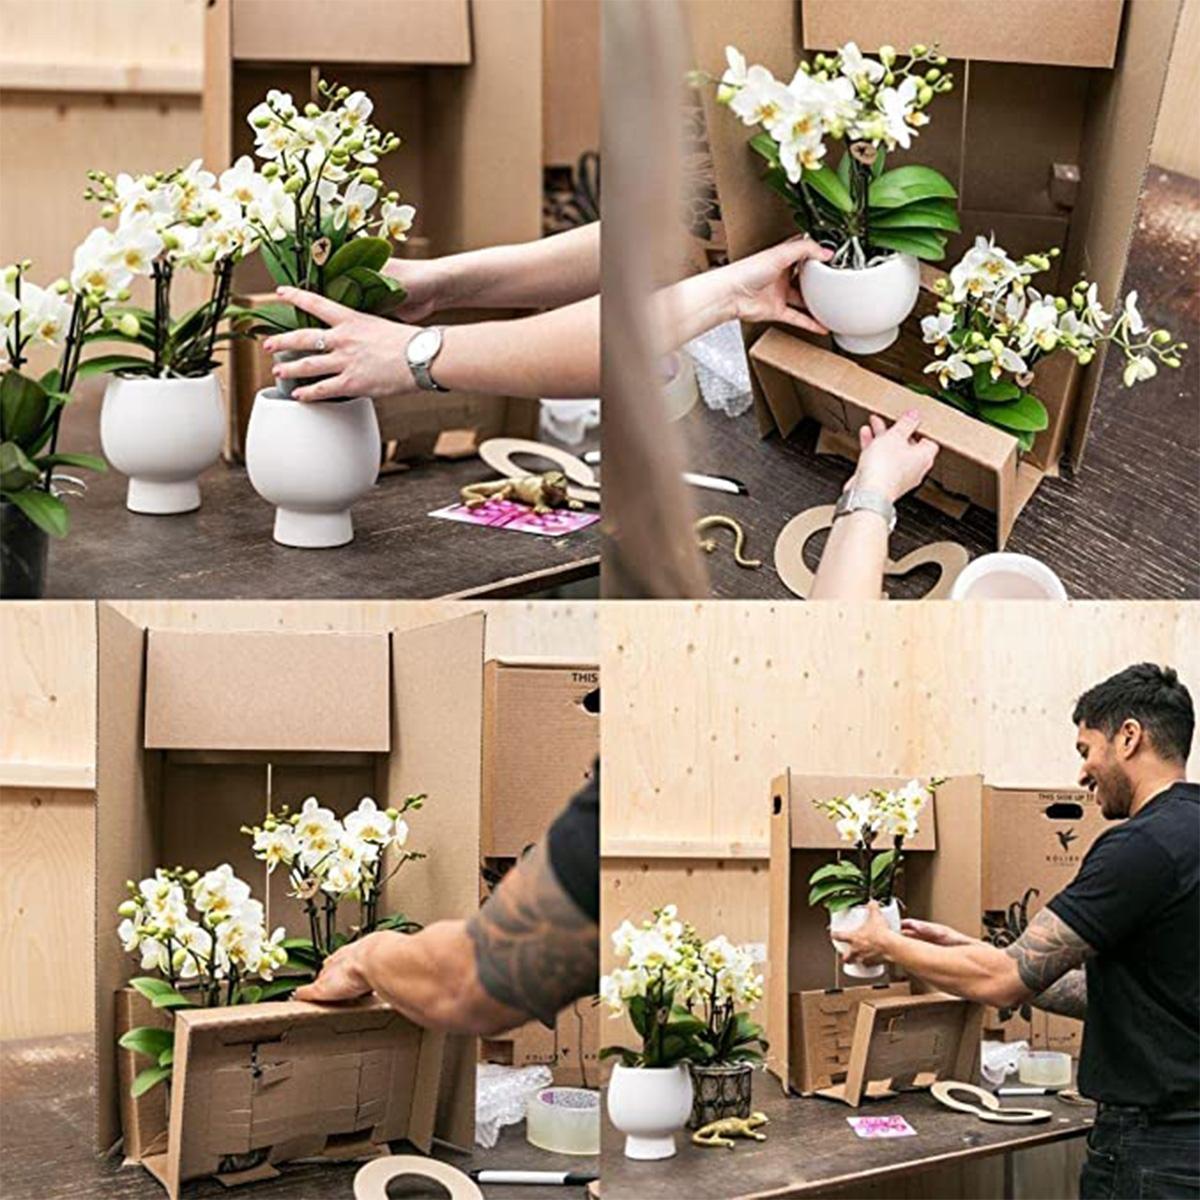 Kolibri Company - Planten set Ring pot zand | Set met geurende Phalaenopsis orchidee Ø9cm en groene planten Succulent Aloë Brevifolia Ø6cm  | incl. zand kleurige sierpotten